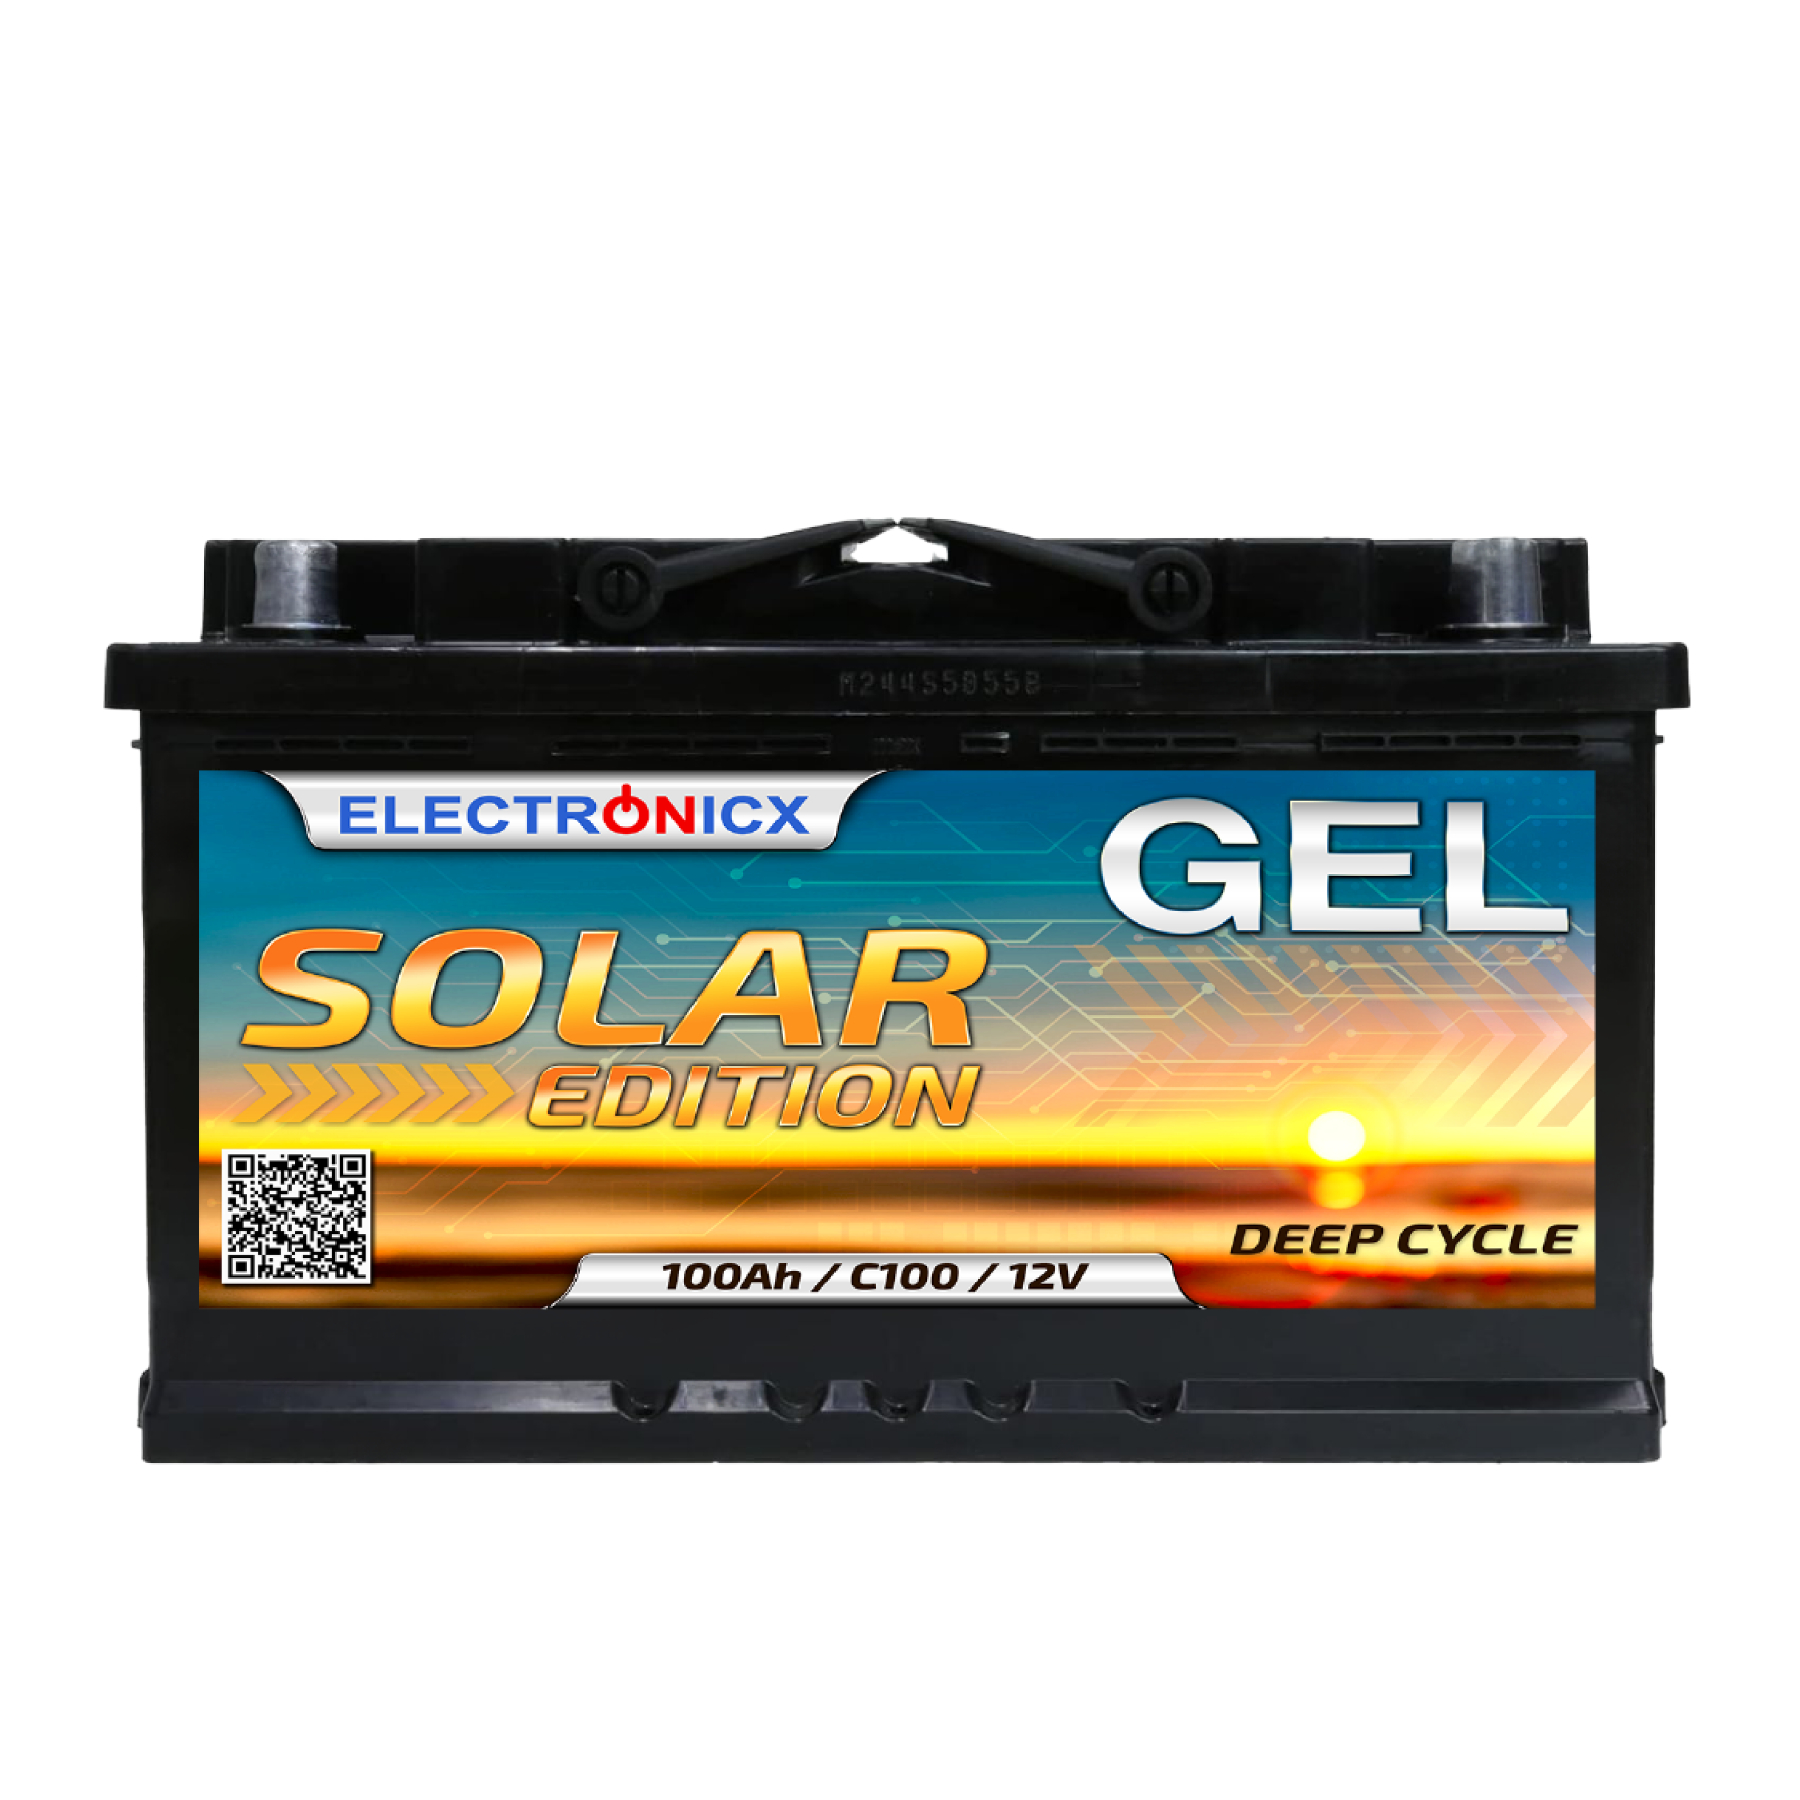 Electronicx Solar Edition GEL Batterie 100 AH 12V, 144,90 €